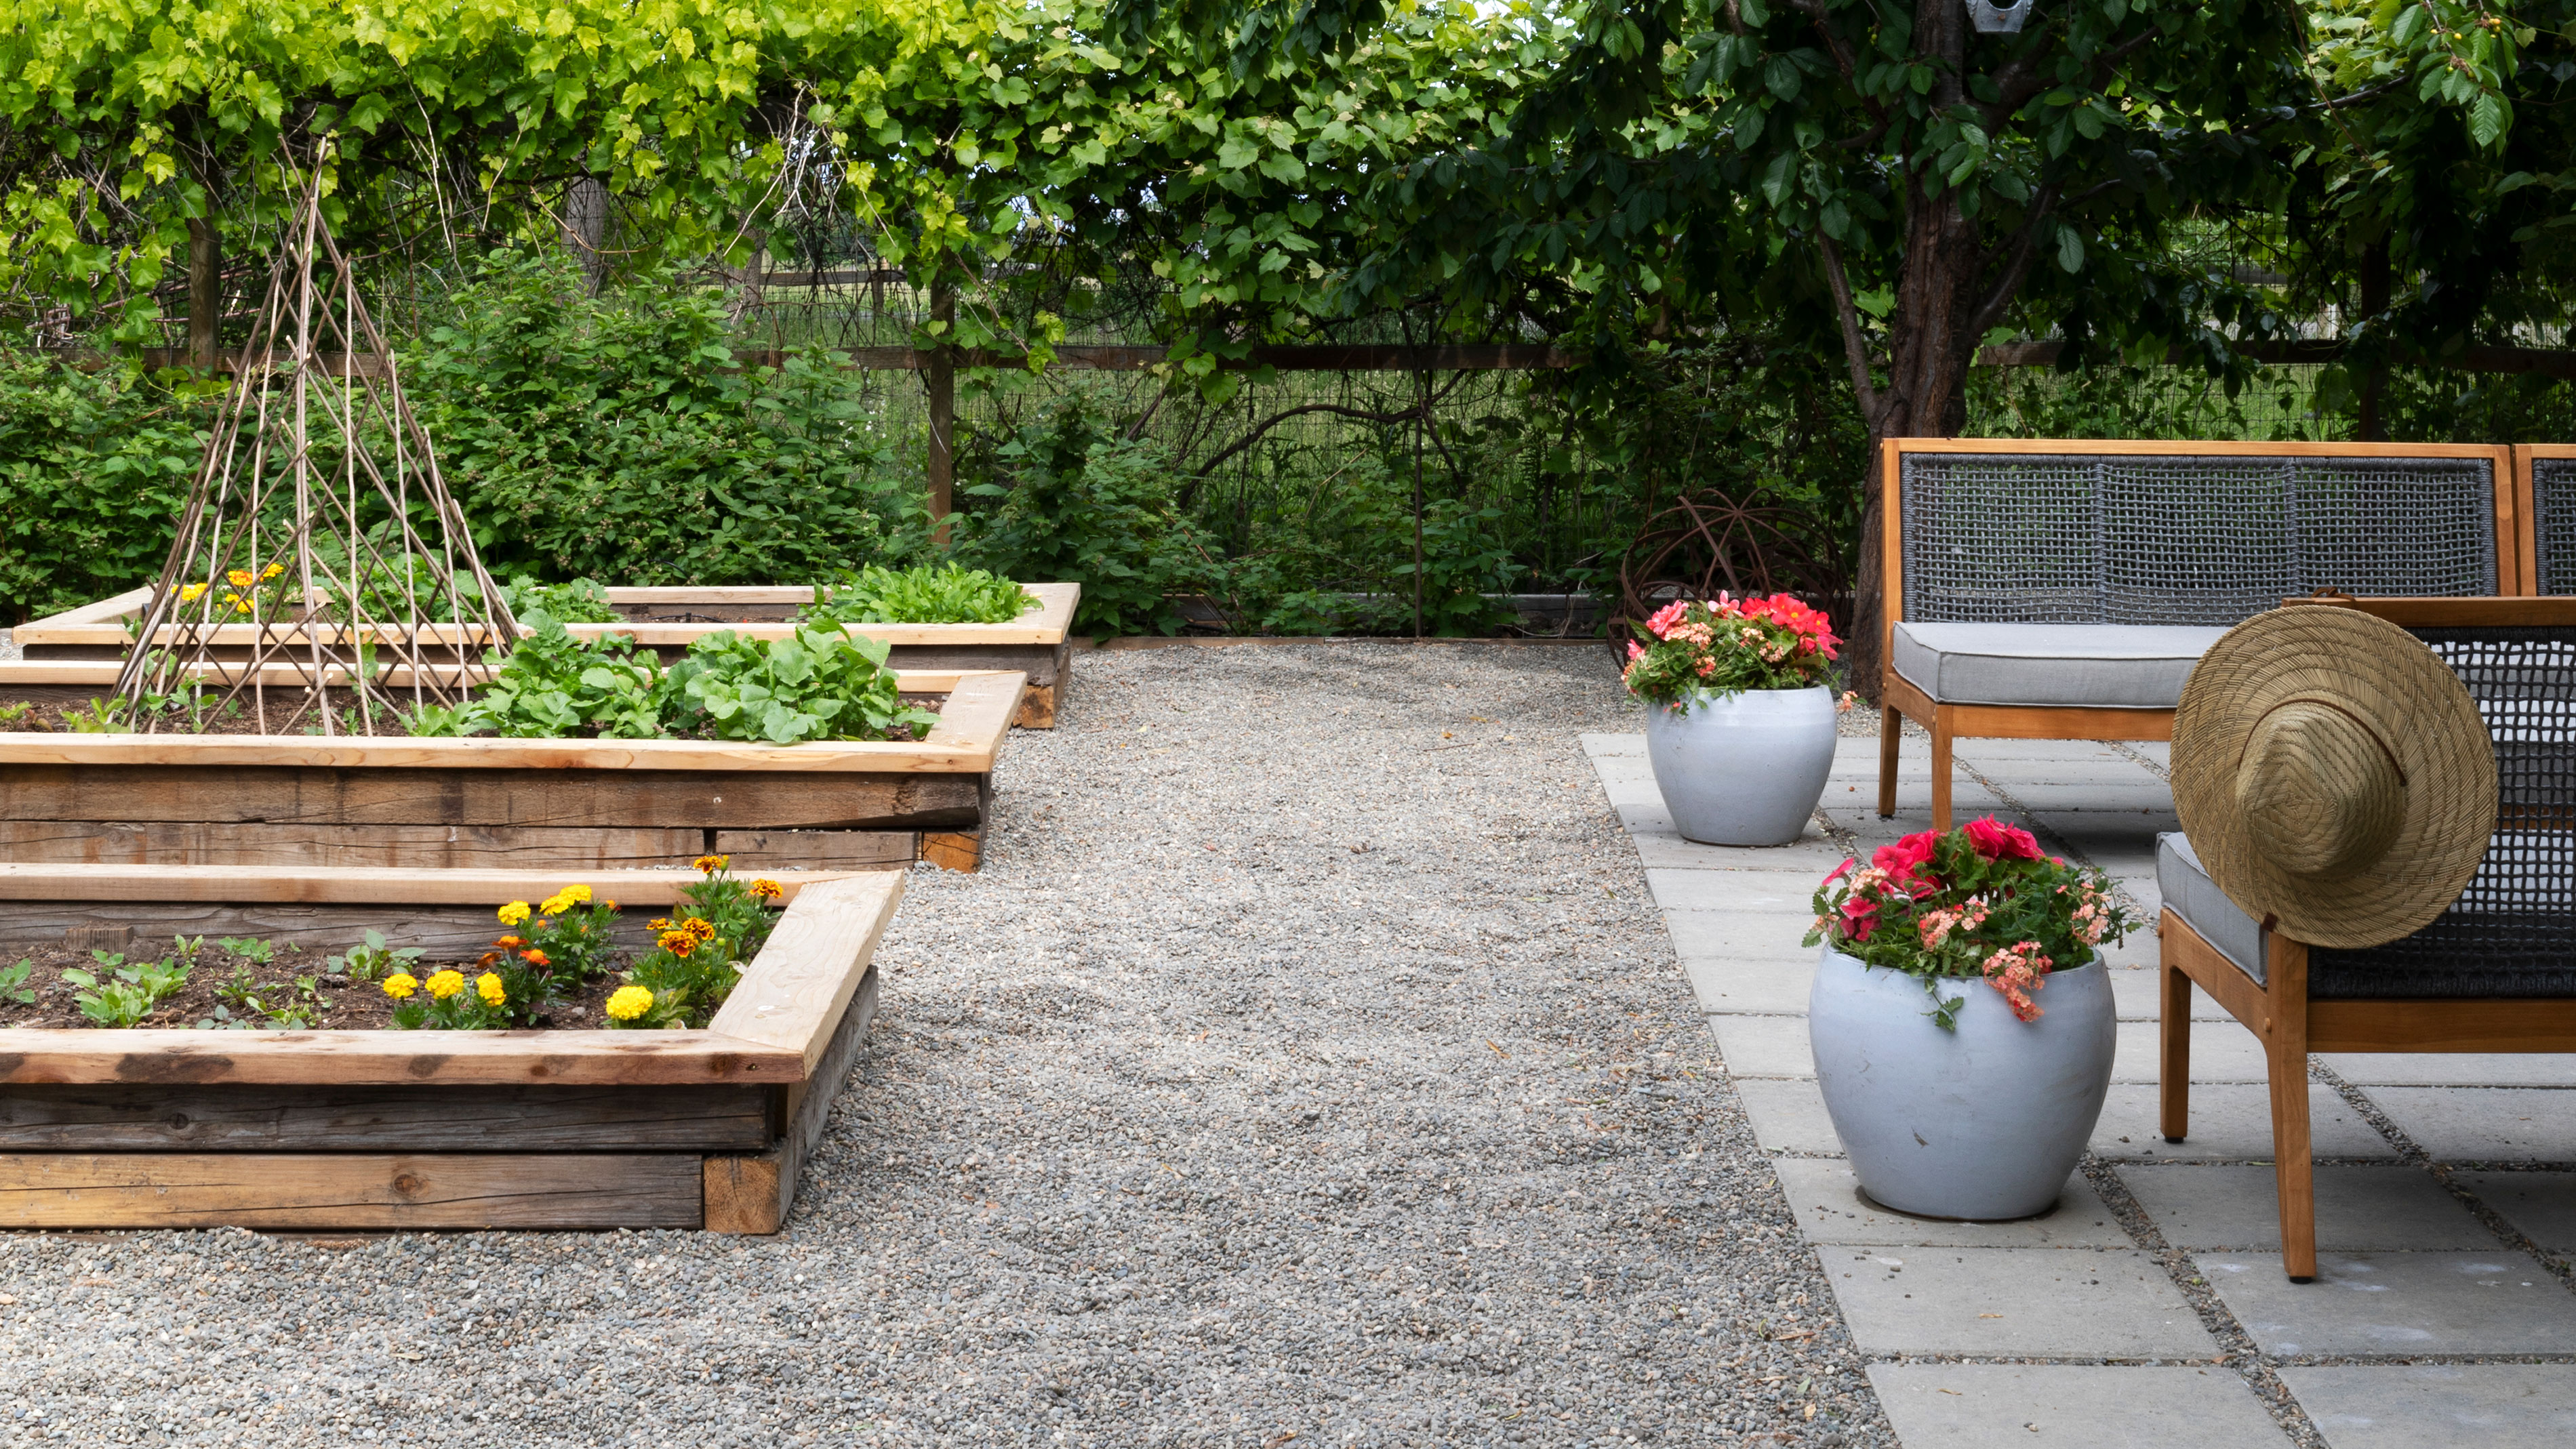 Backyard Ideas On A Budget Create An, Landscaping A Large Backyard On Budget